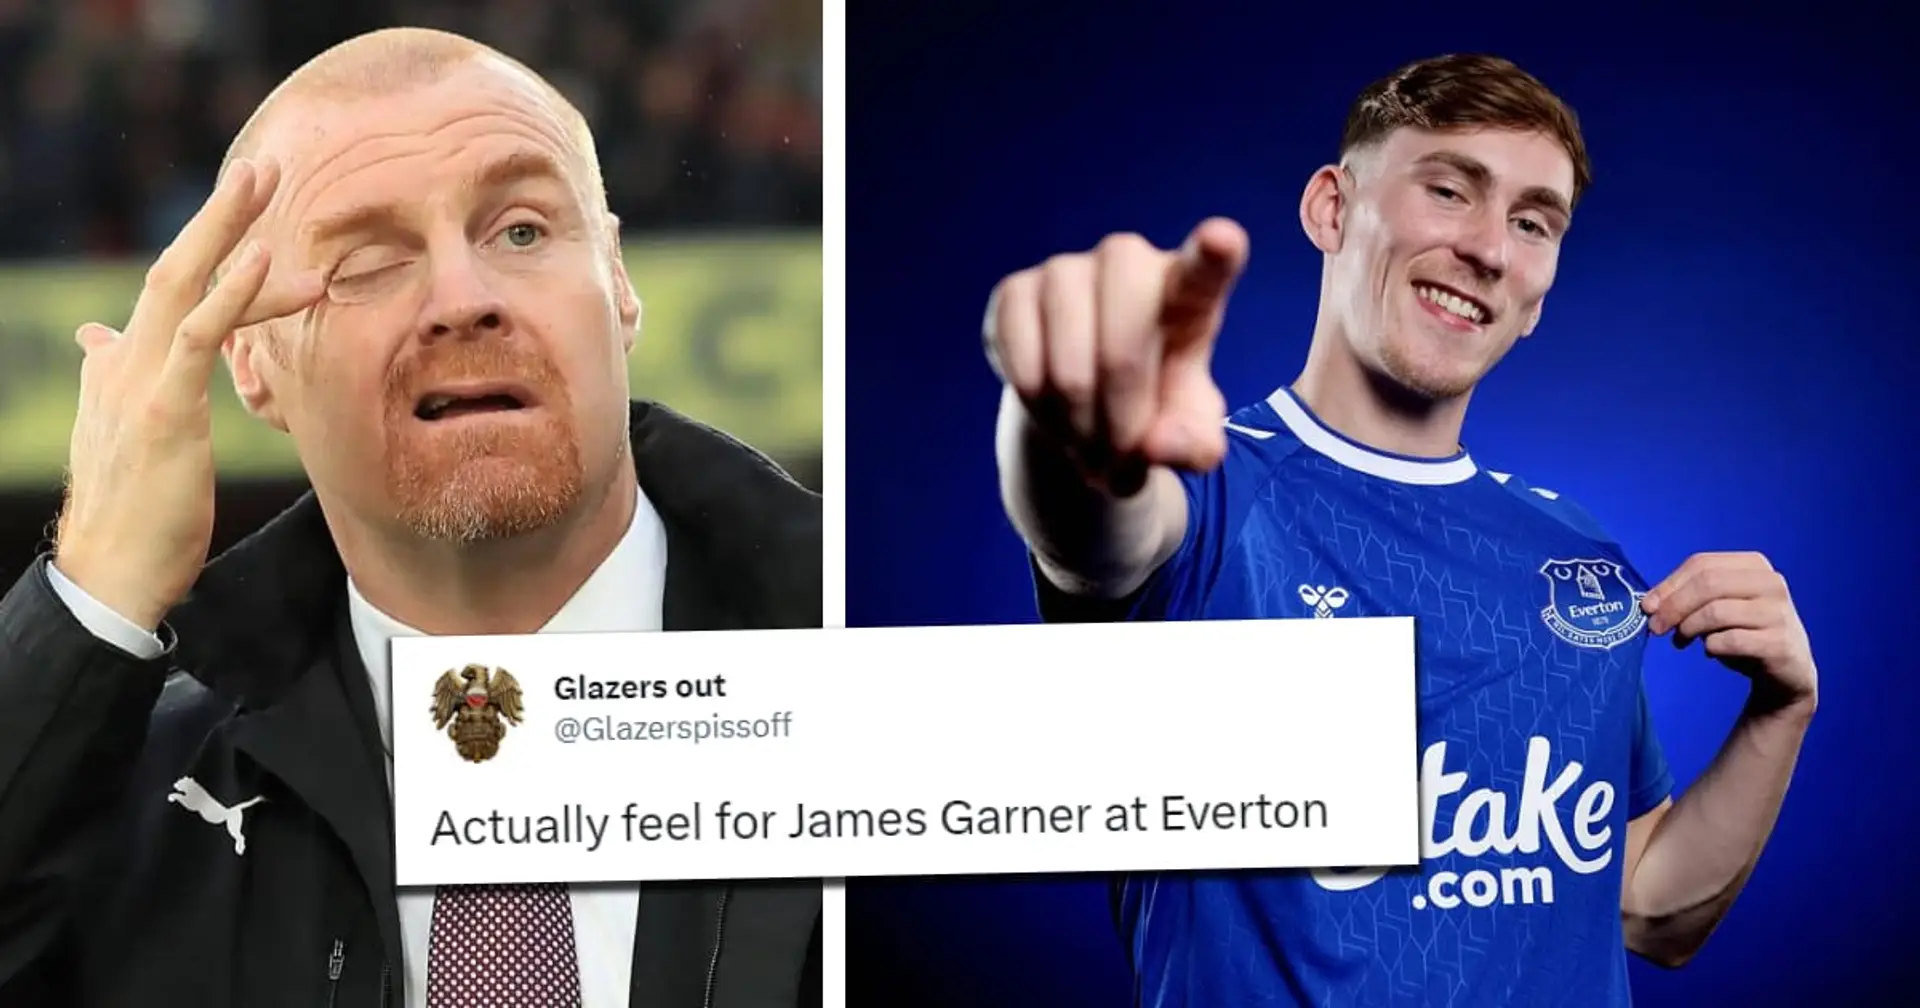 Has James Garner been any good at Everton? Answered